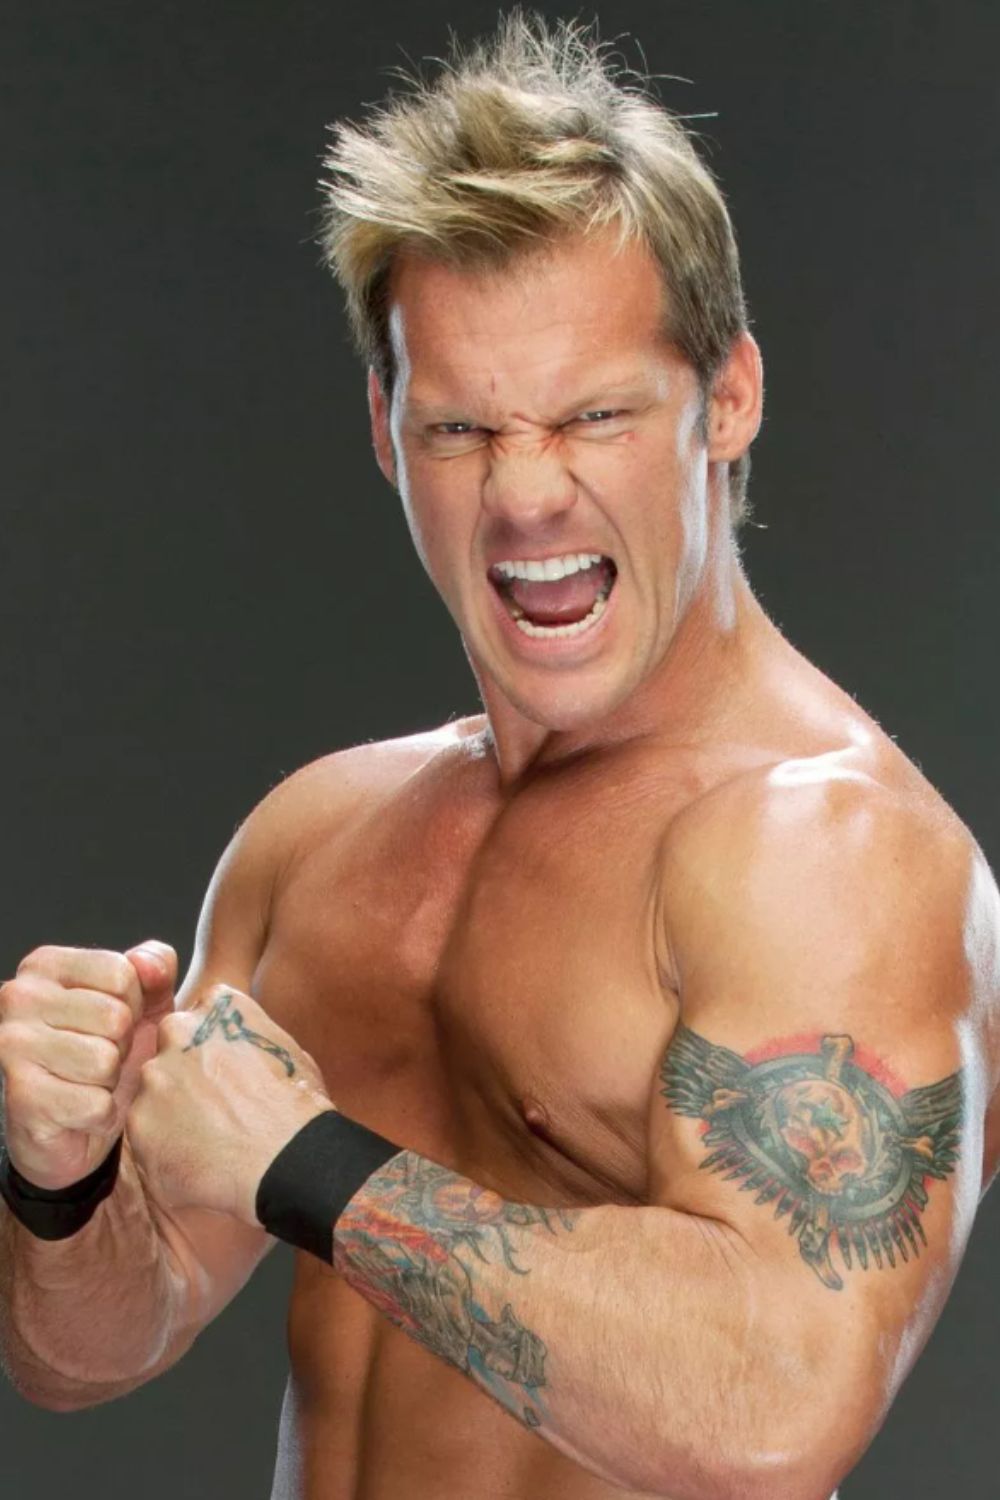 American-Canadian Professional Wrestler Chris Jericho